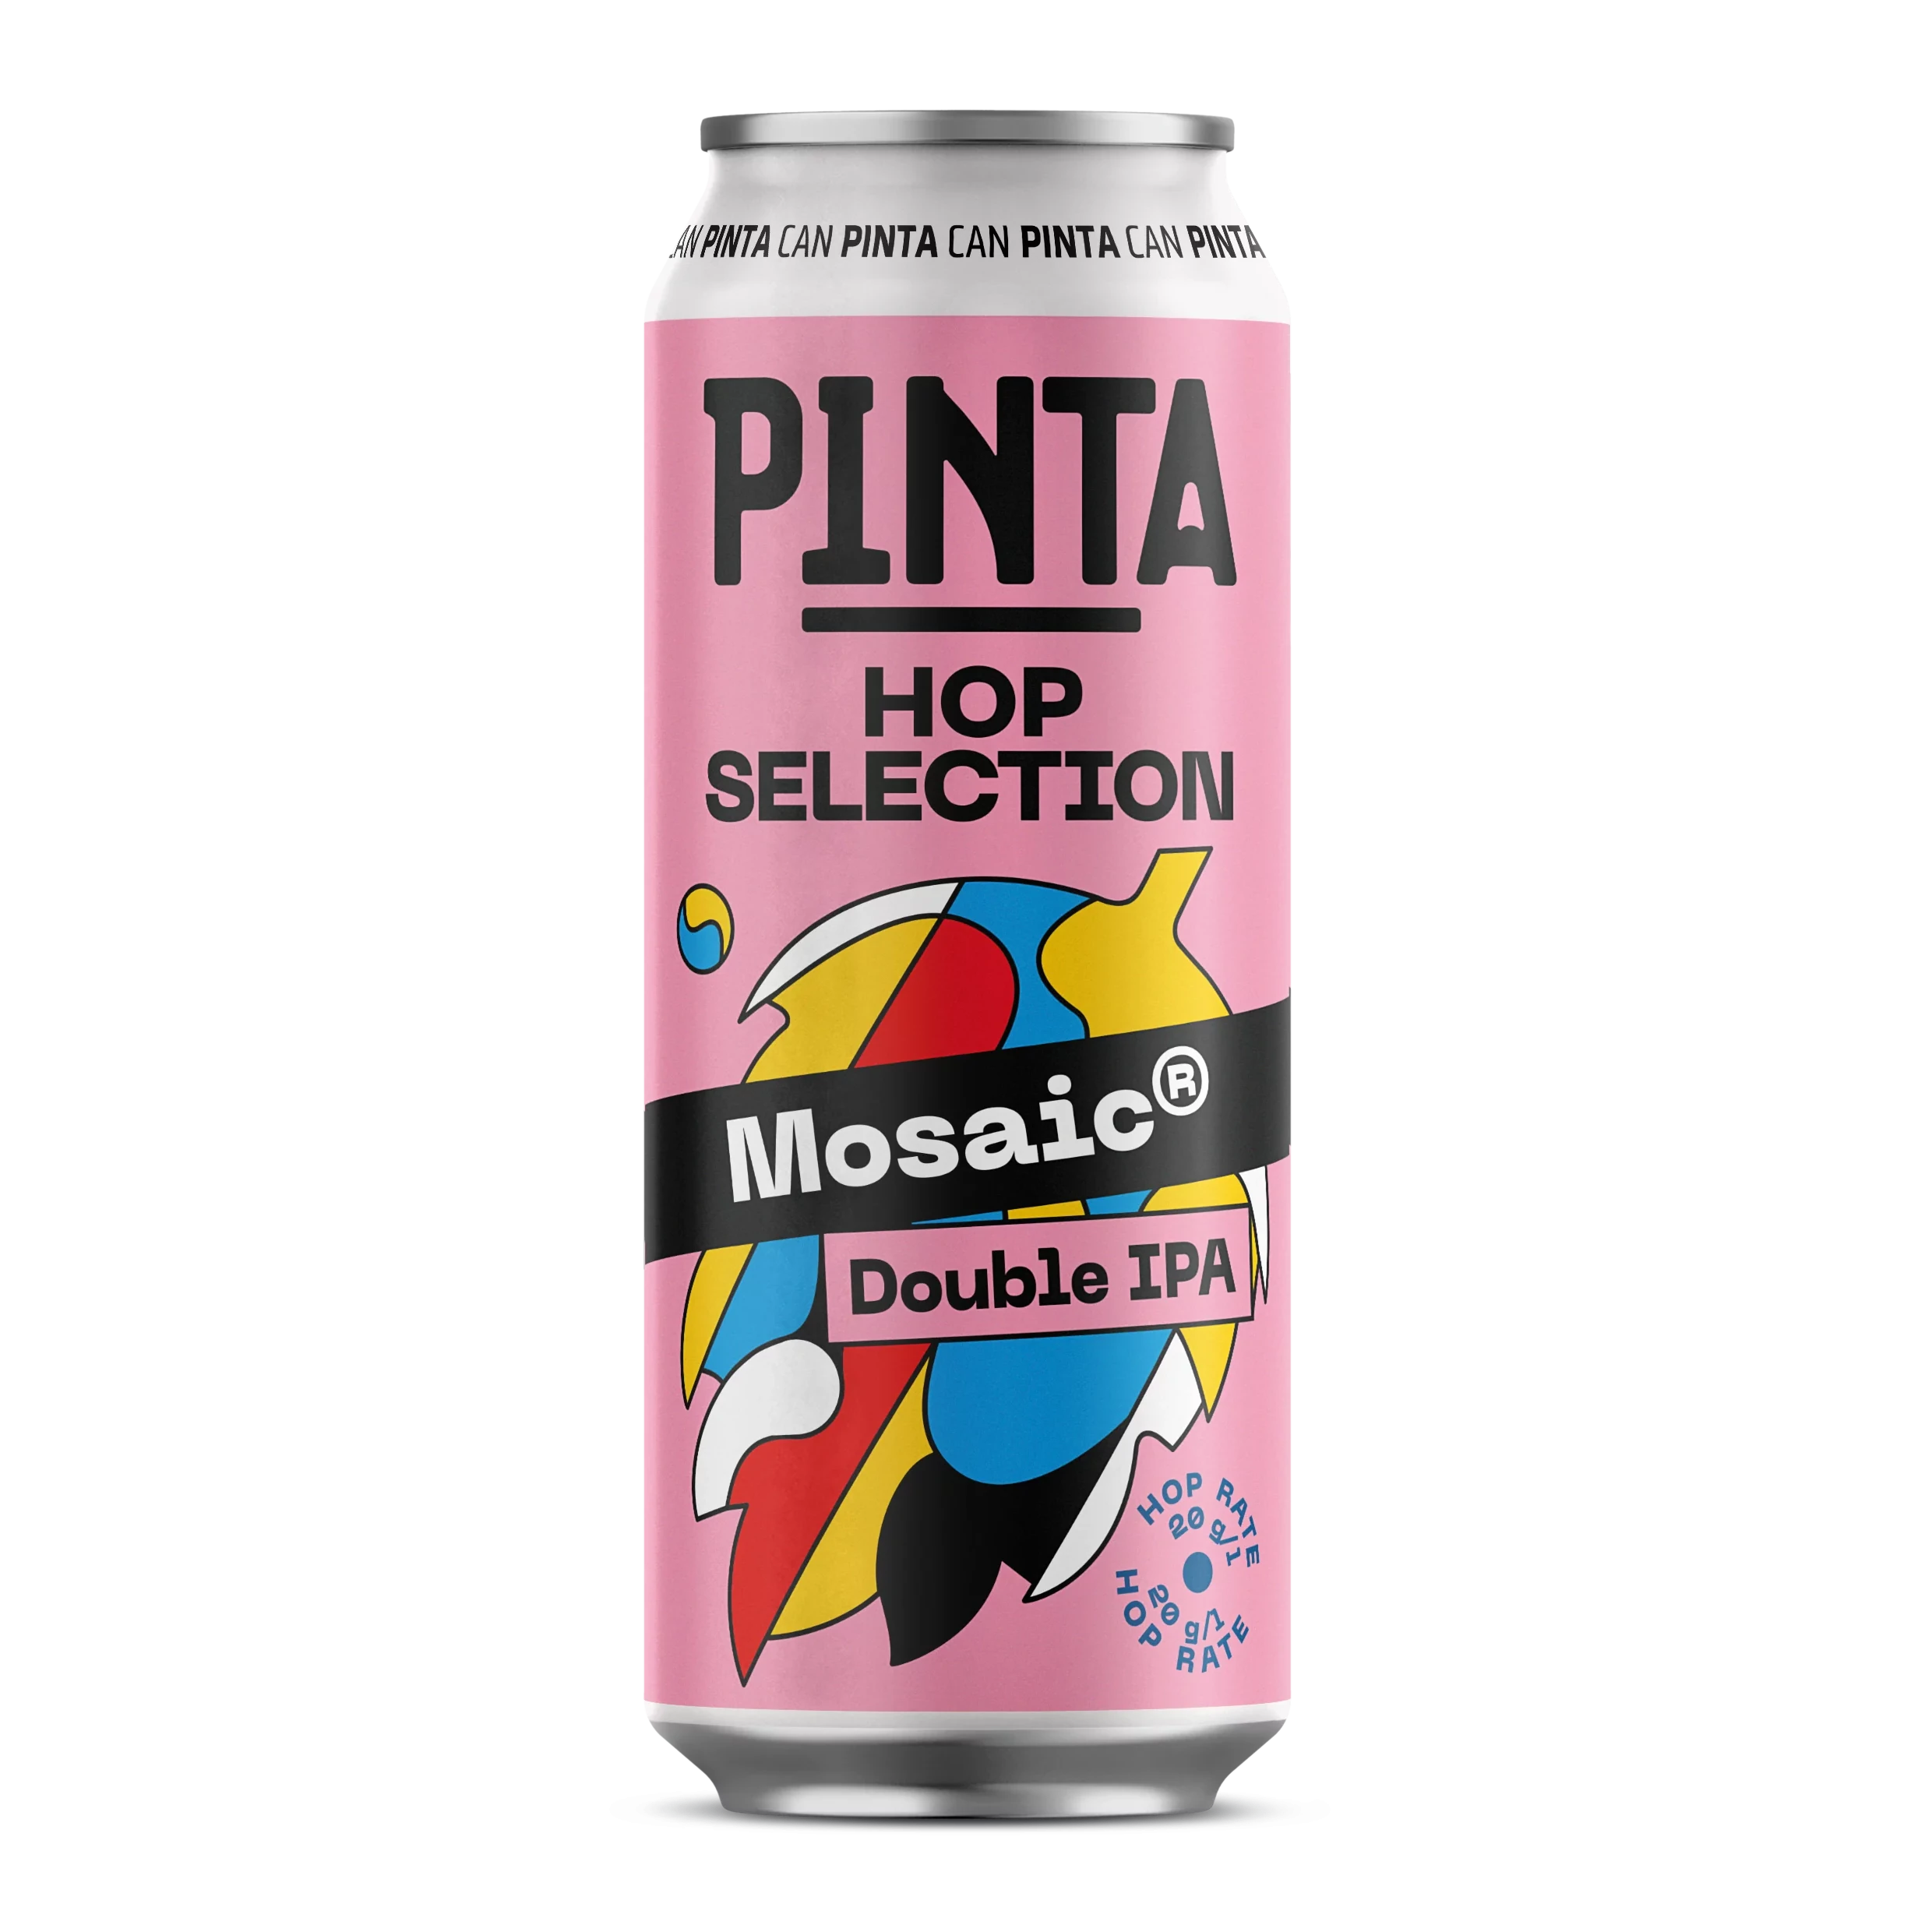 PINTA HOP SELECTION Mosaic Double IPA 8.3% 0.5L